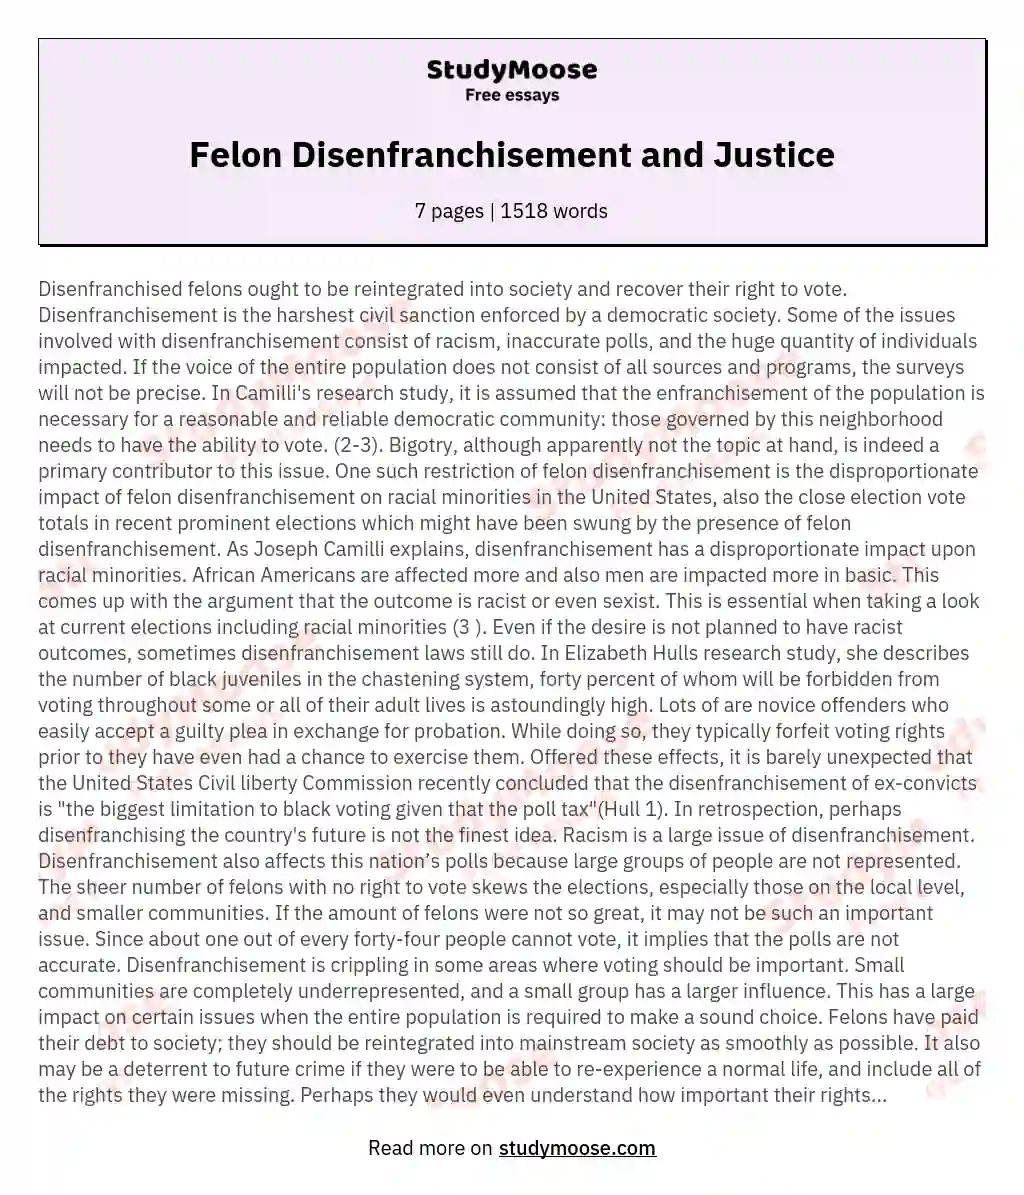 Felon Disenfranchisement and Justice essay